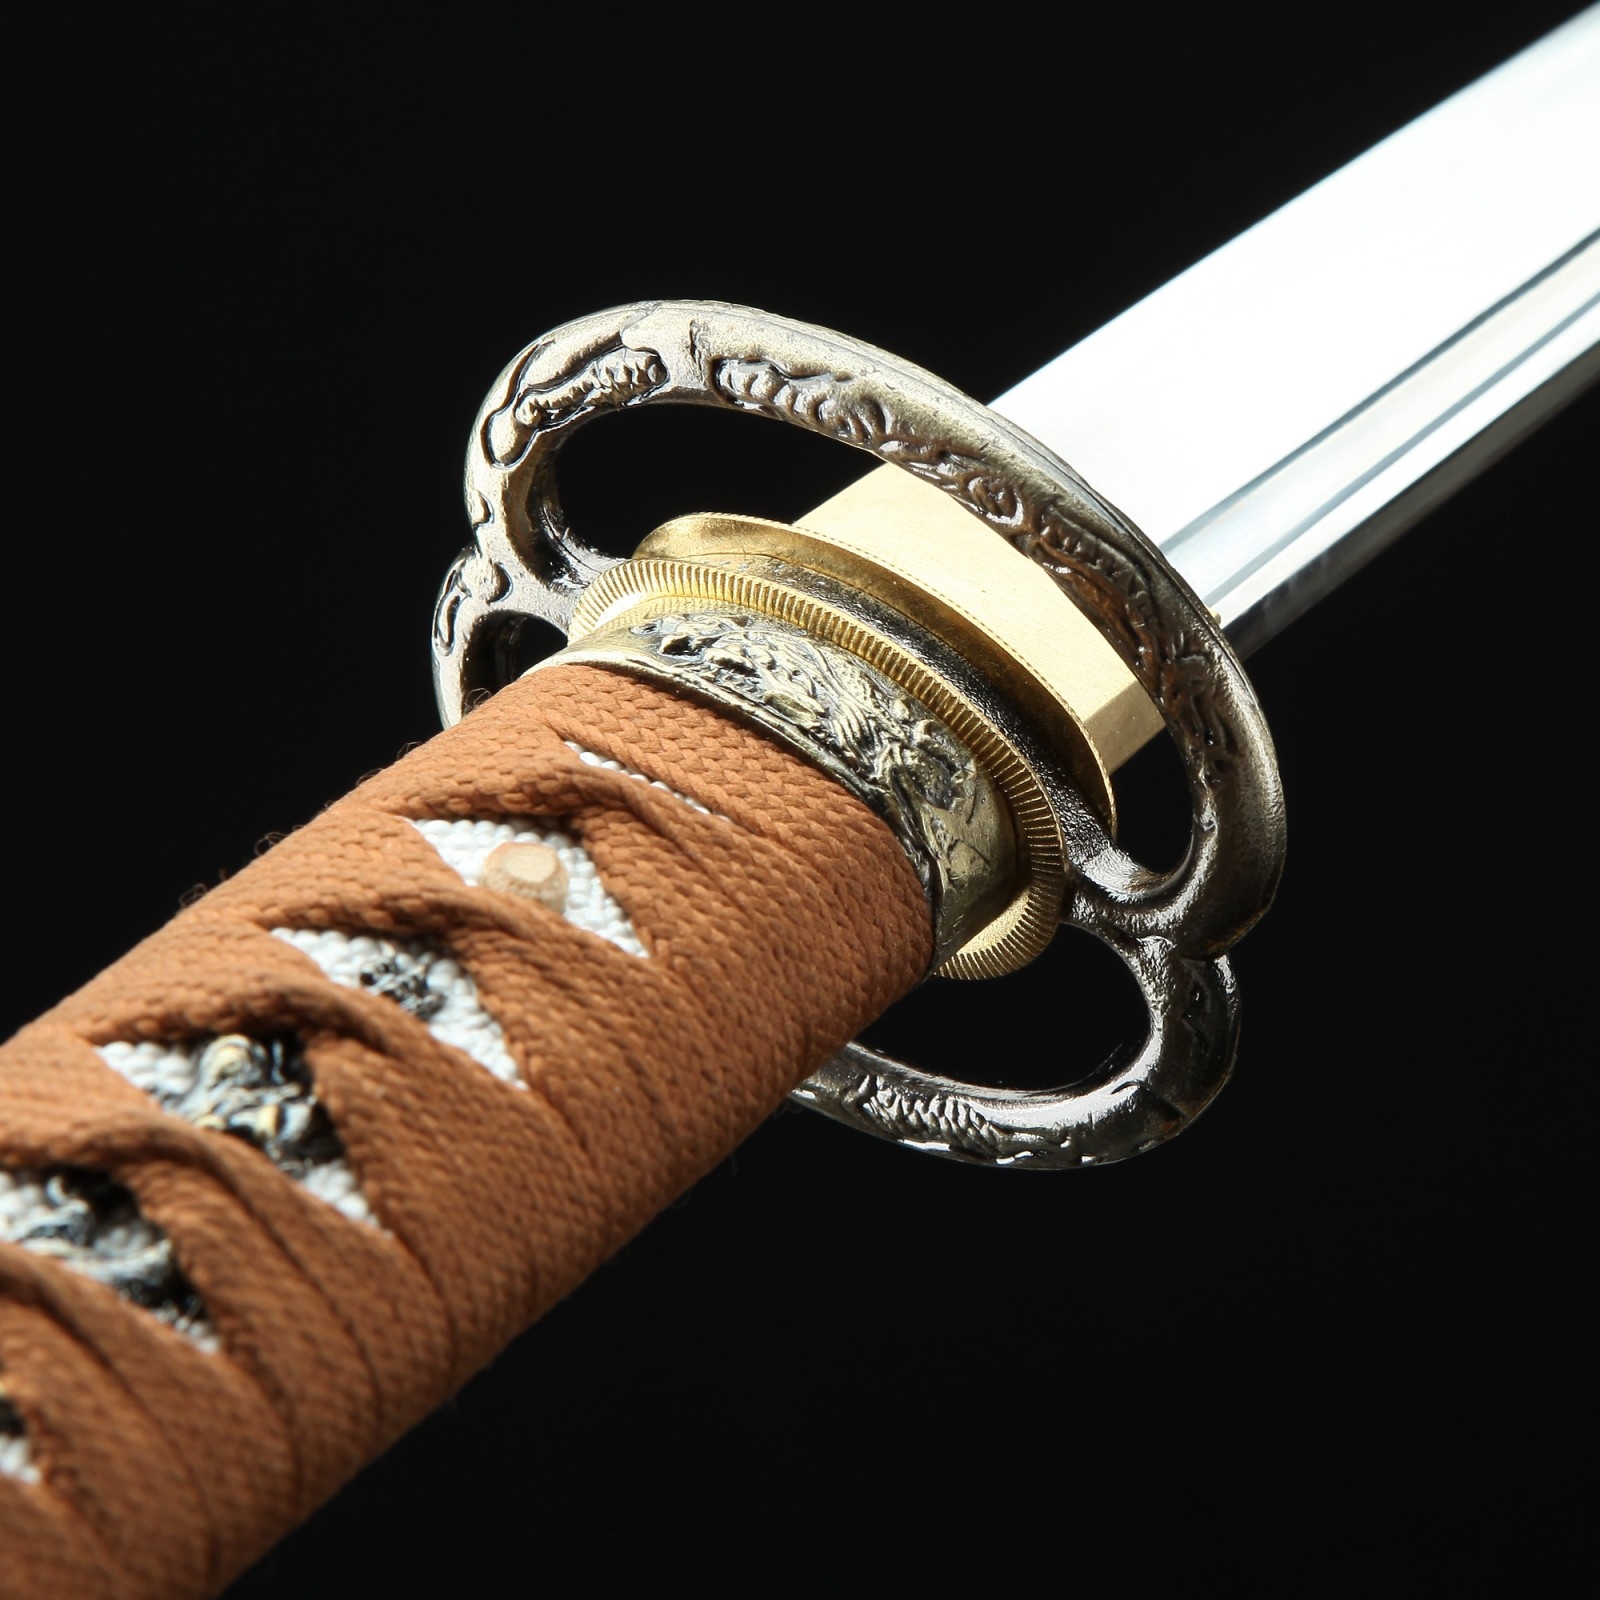 Yellow Katana | Handmade Japanese Katana Sword 1065 Carbon Steel With ...